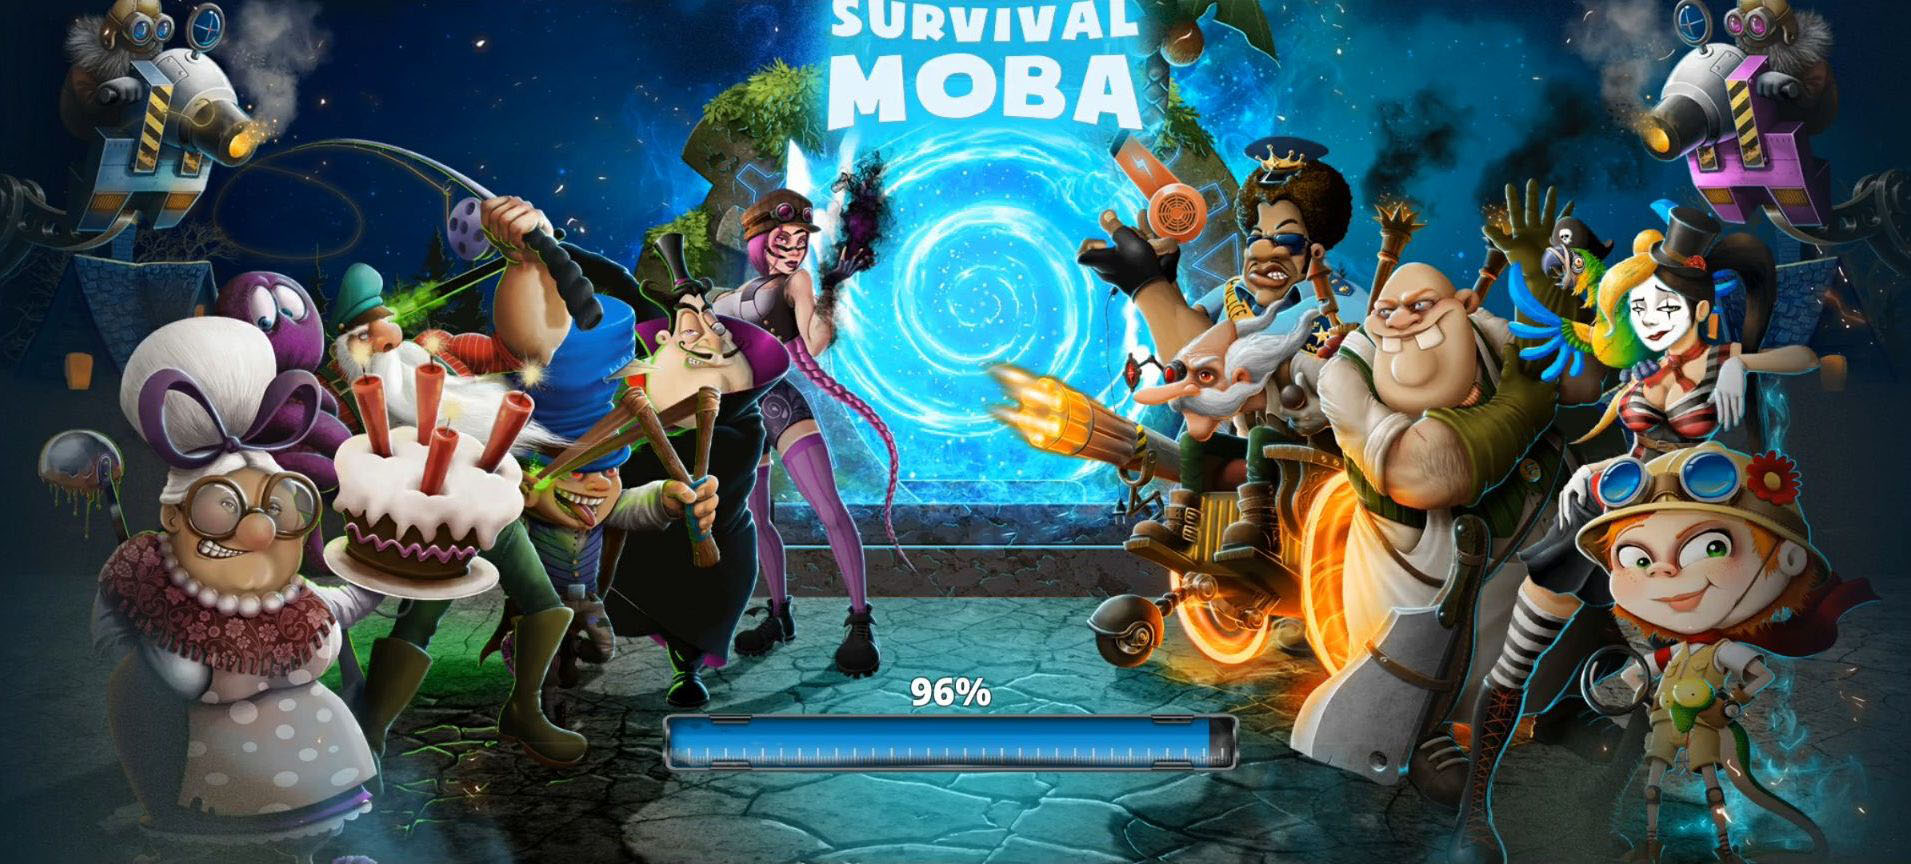 Scarica Survival MOBA gratis per Android.